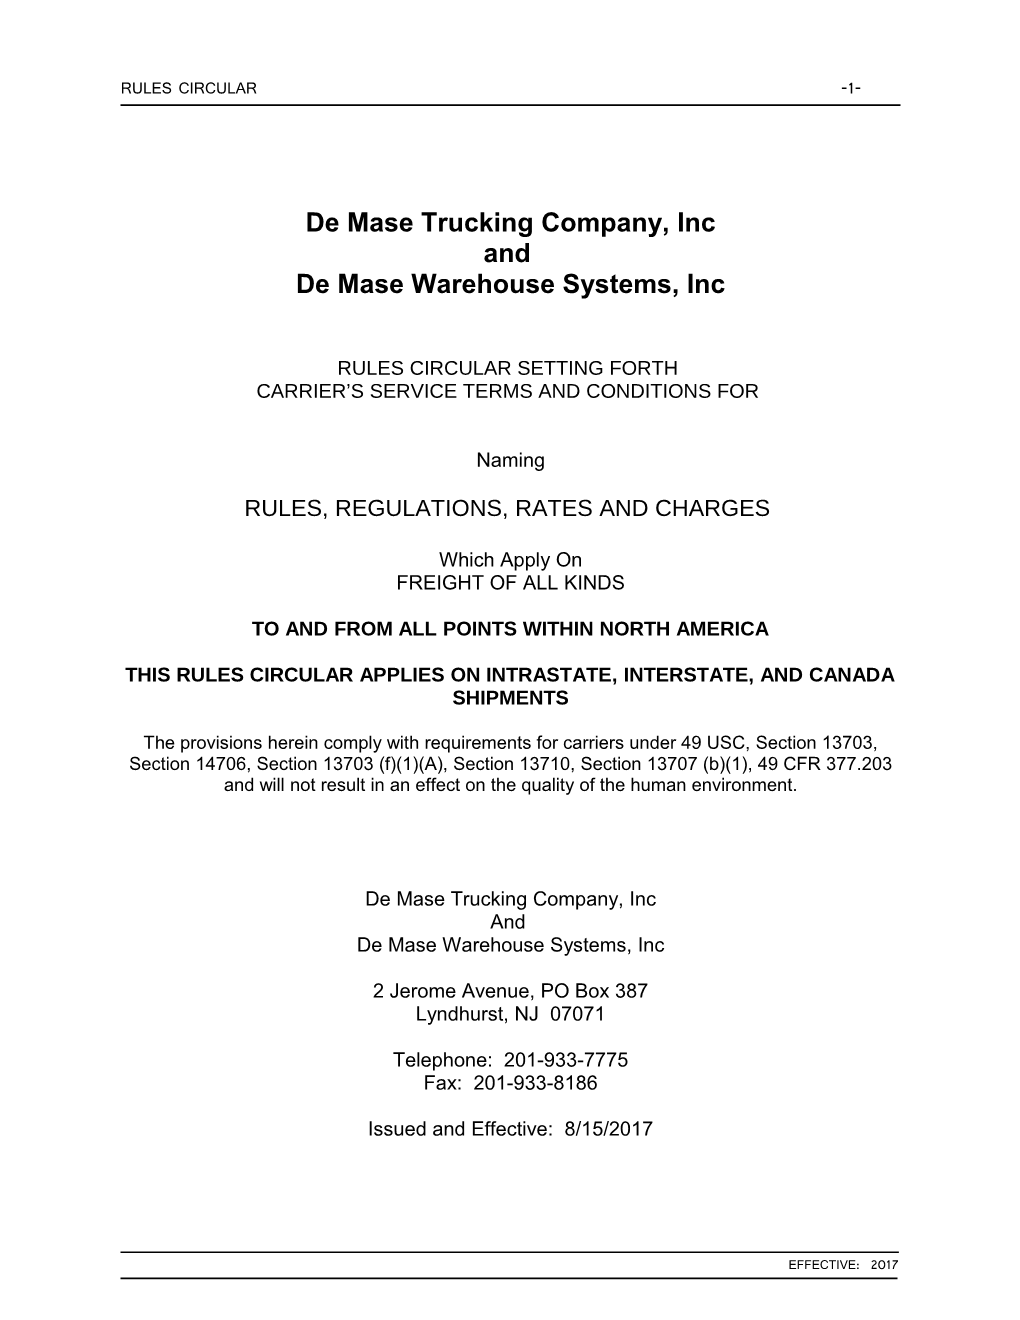 De Mase Trucking Company, Inc